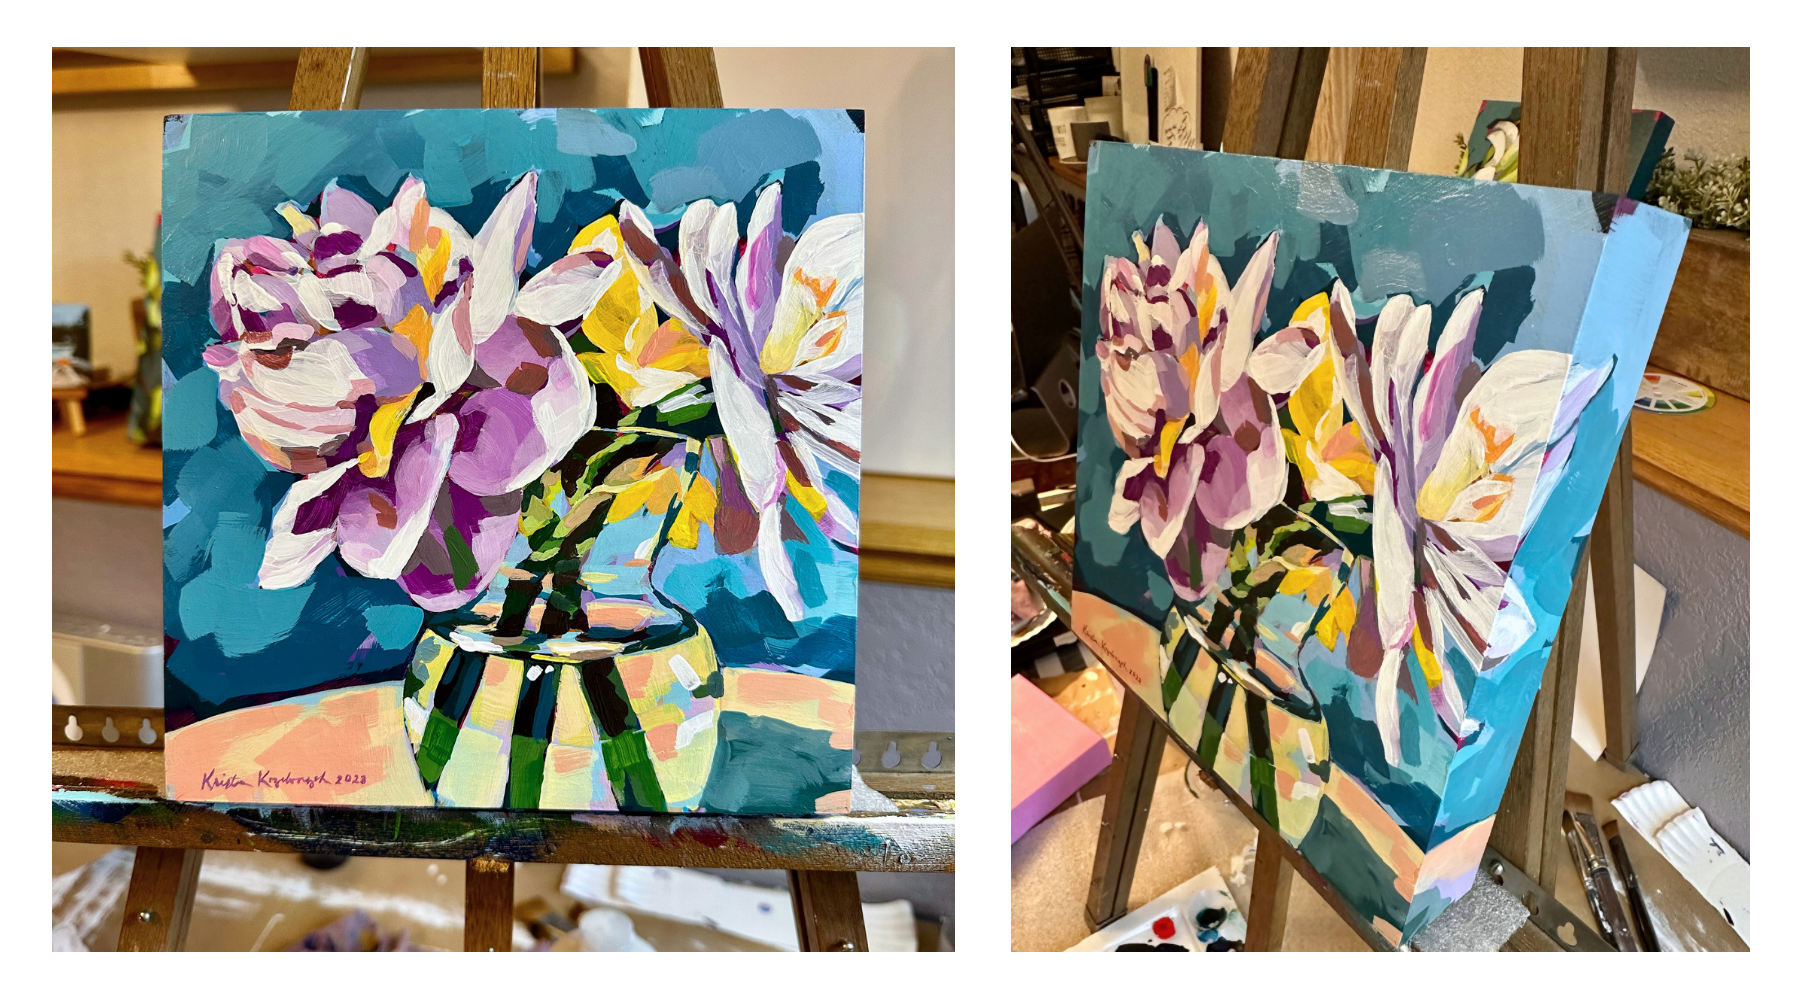 New art — “Double Daffodils”